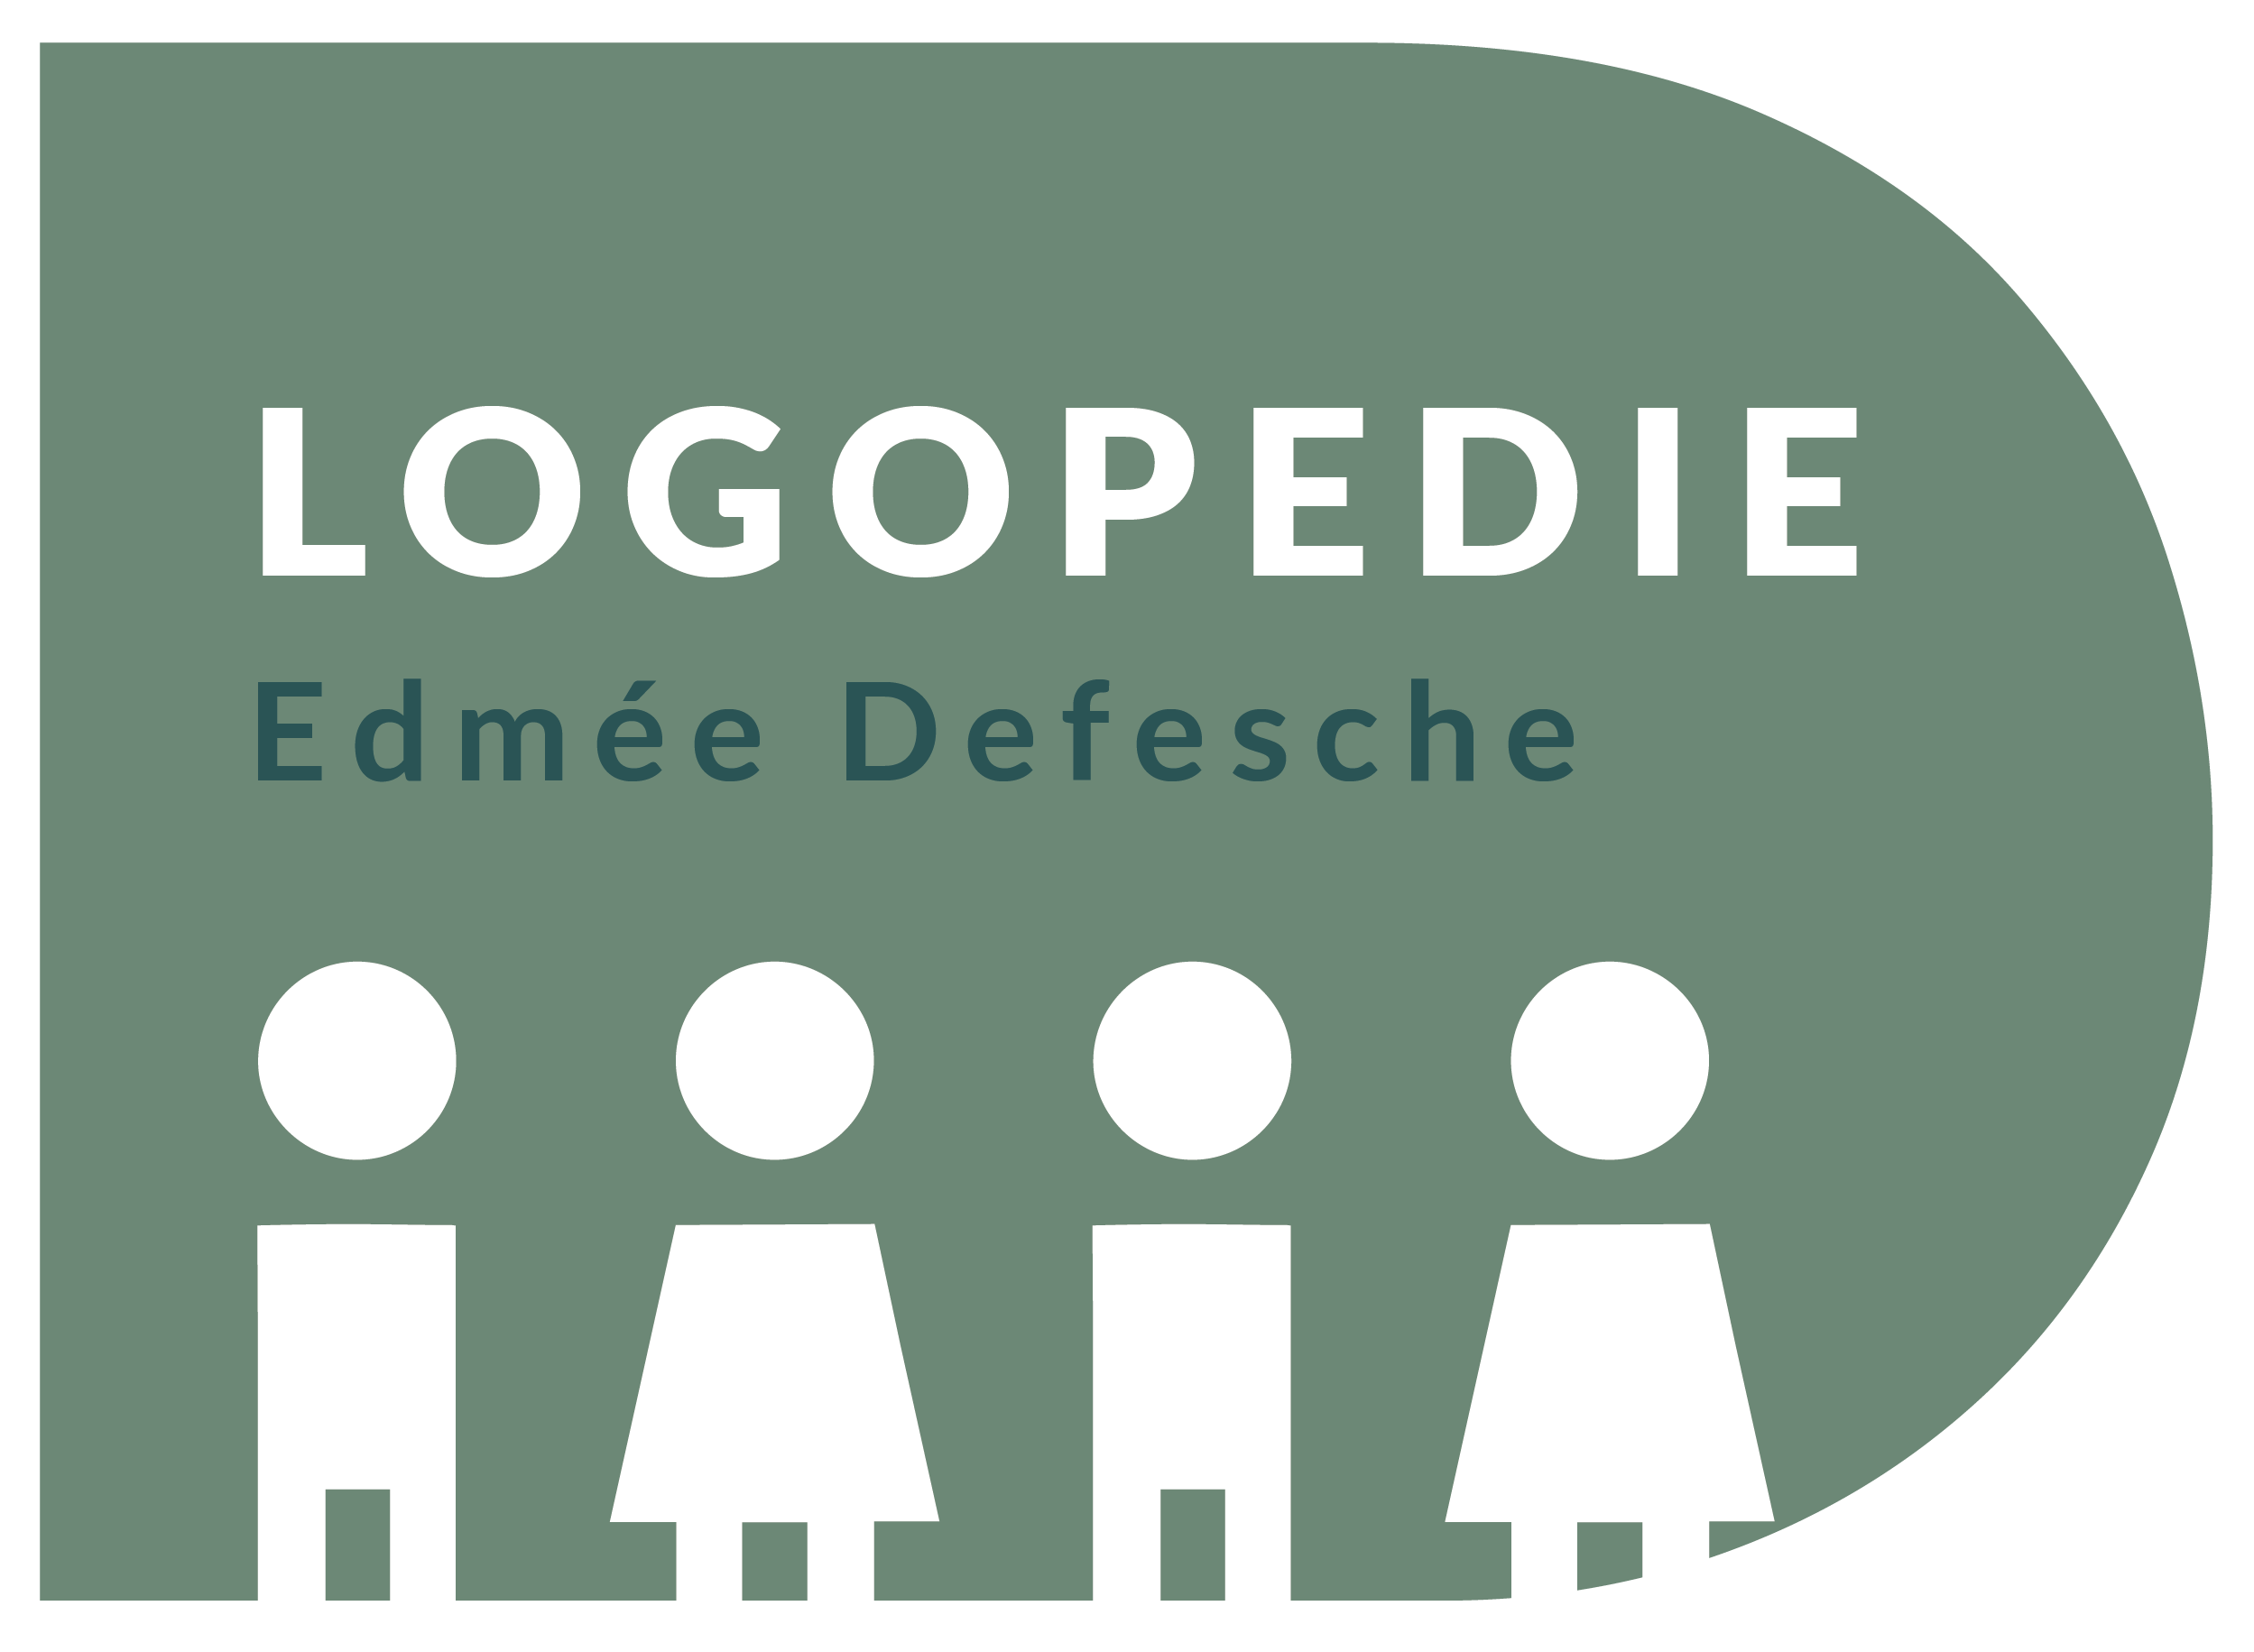 Logopedie Edmée Defesche